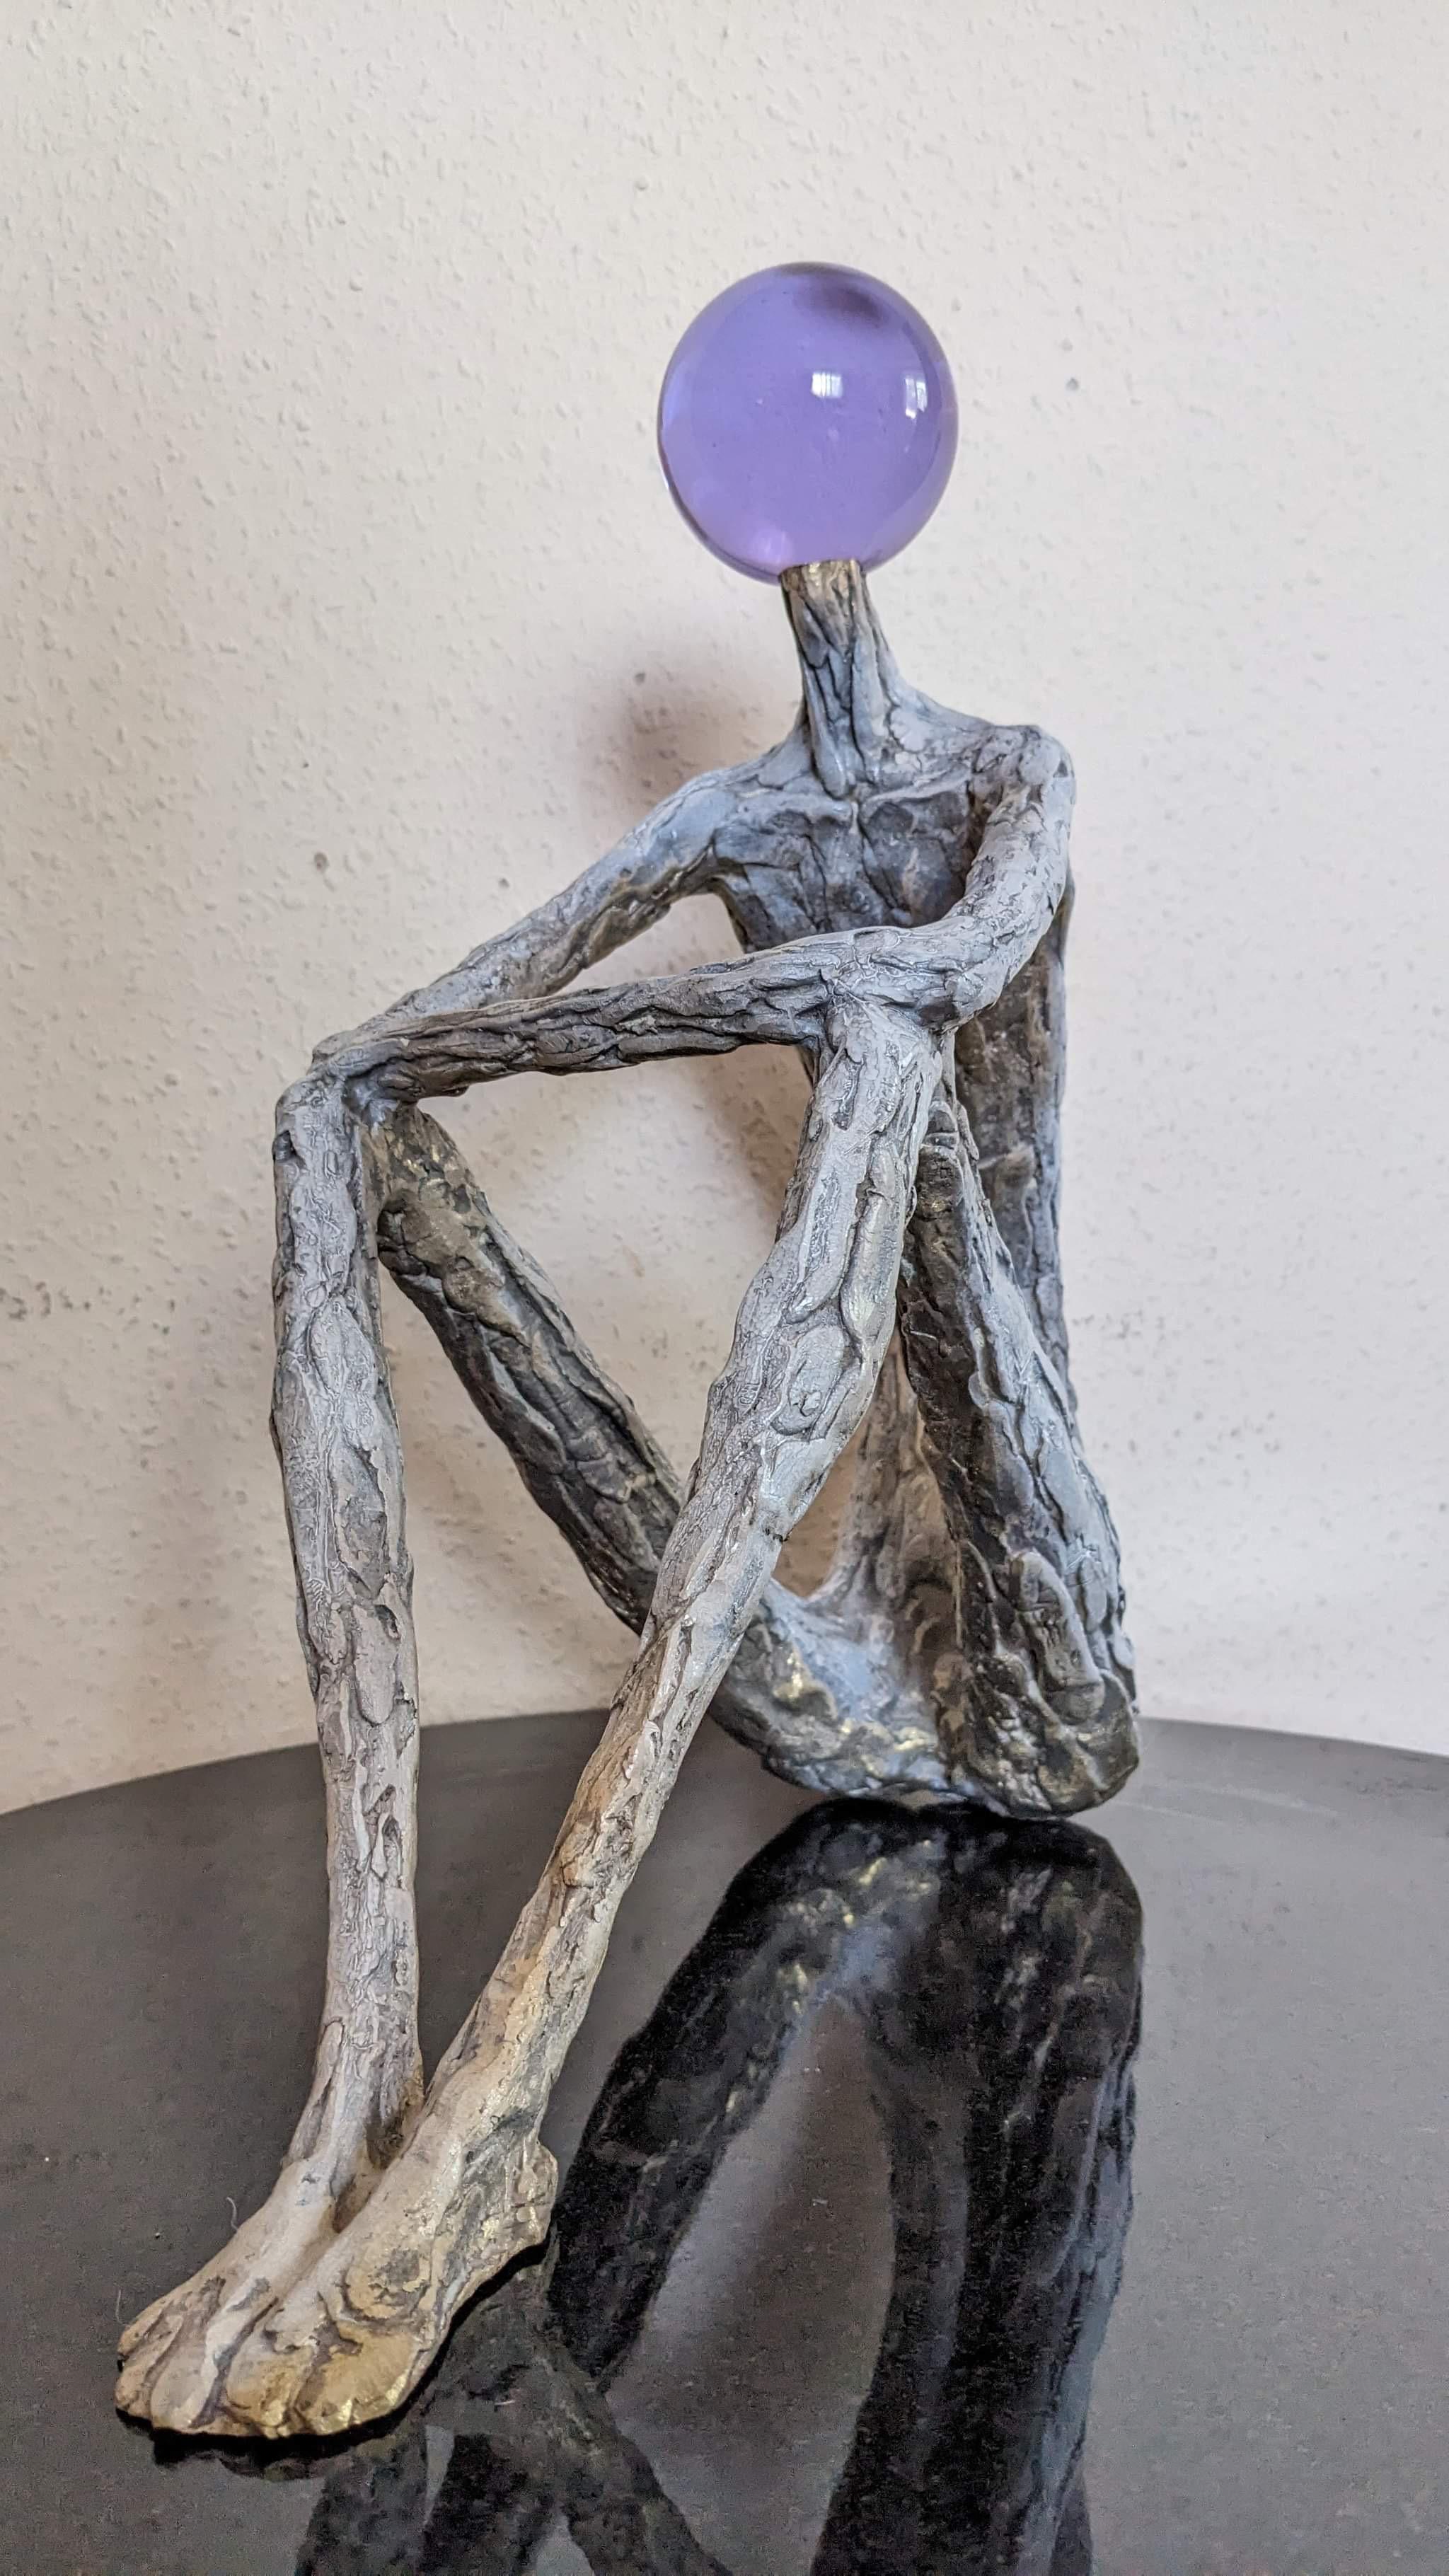 Georgian Contemporary Sculpture by Irakli Tsuladze - Universe For Sale 3